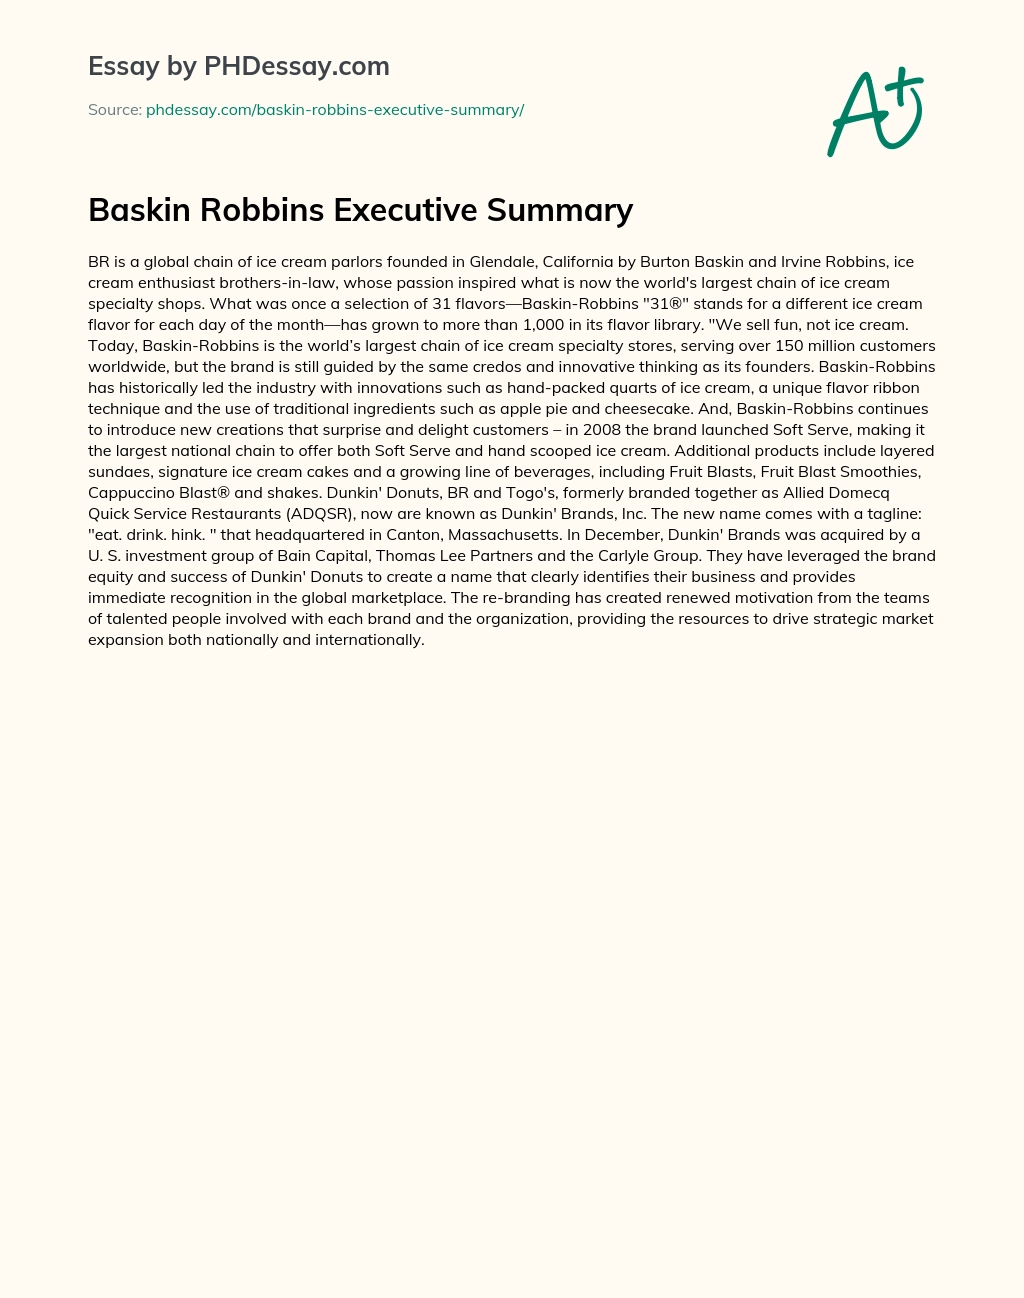 Baskin Robbins Executive Summary essay